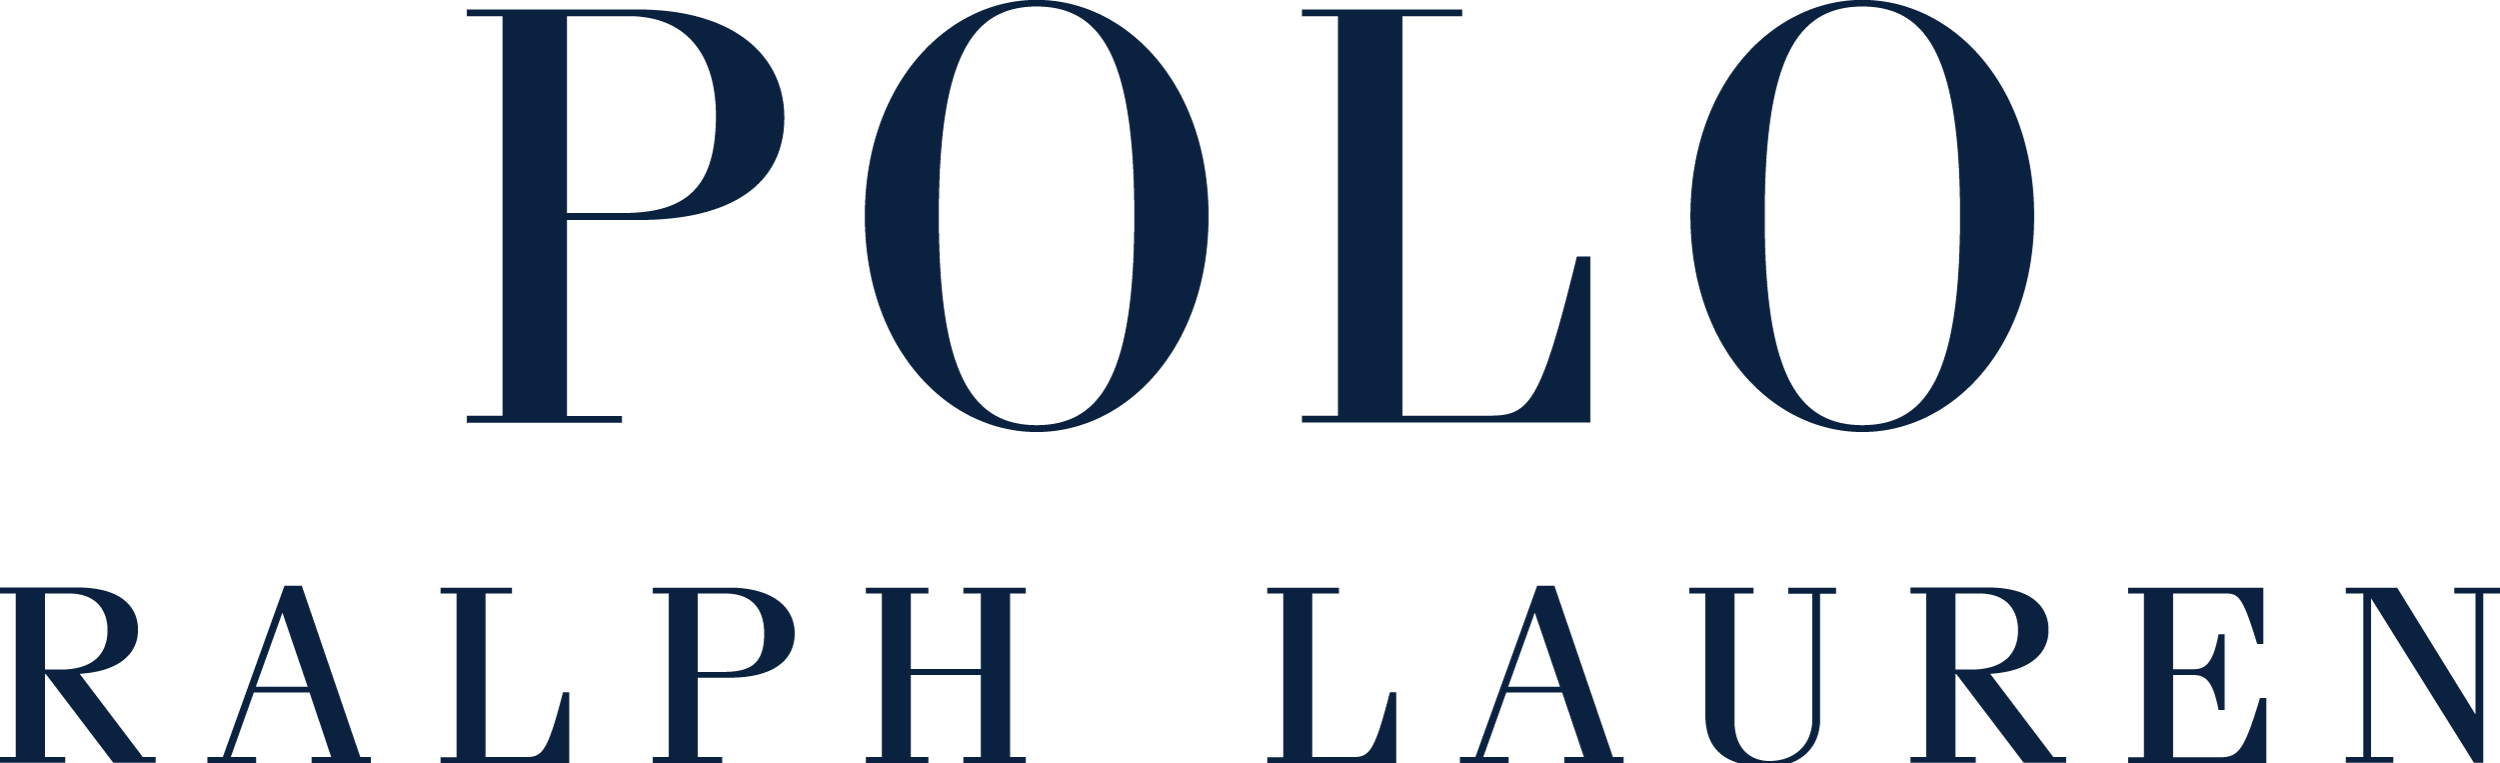 Official partner logo for Polo